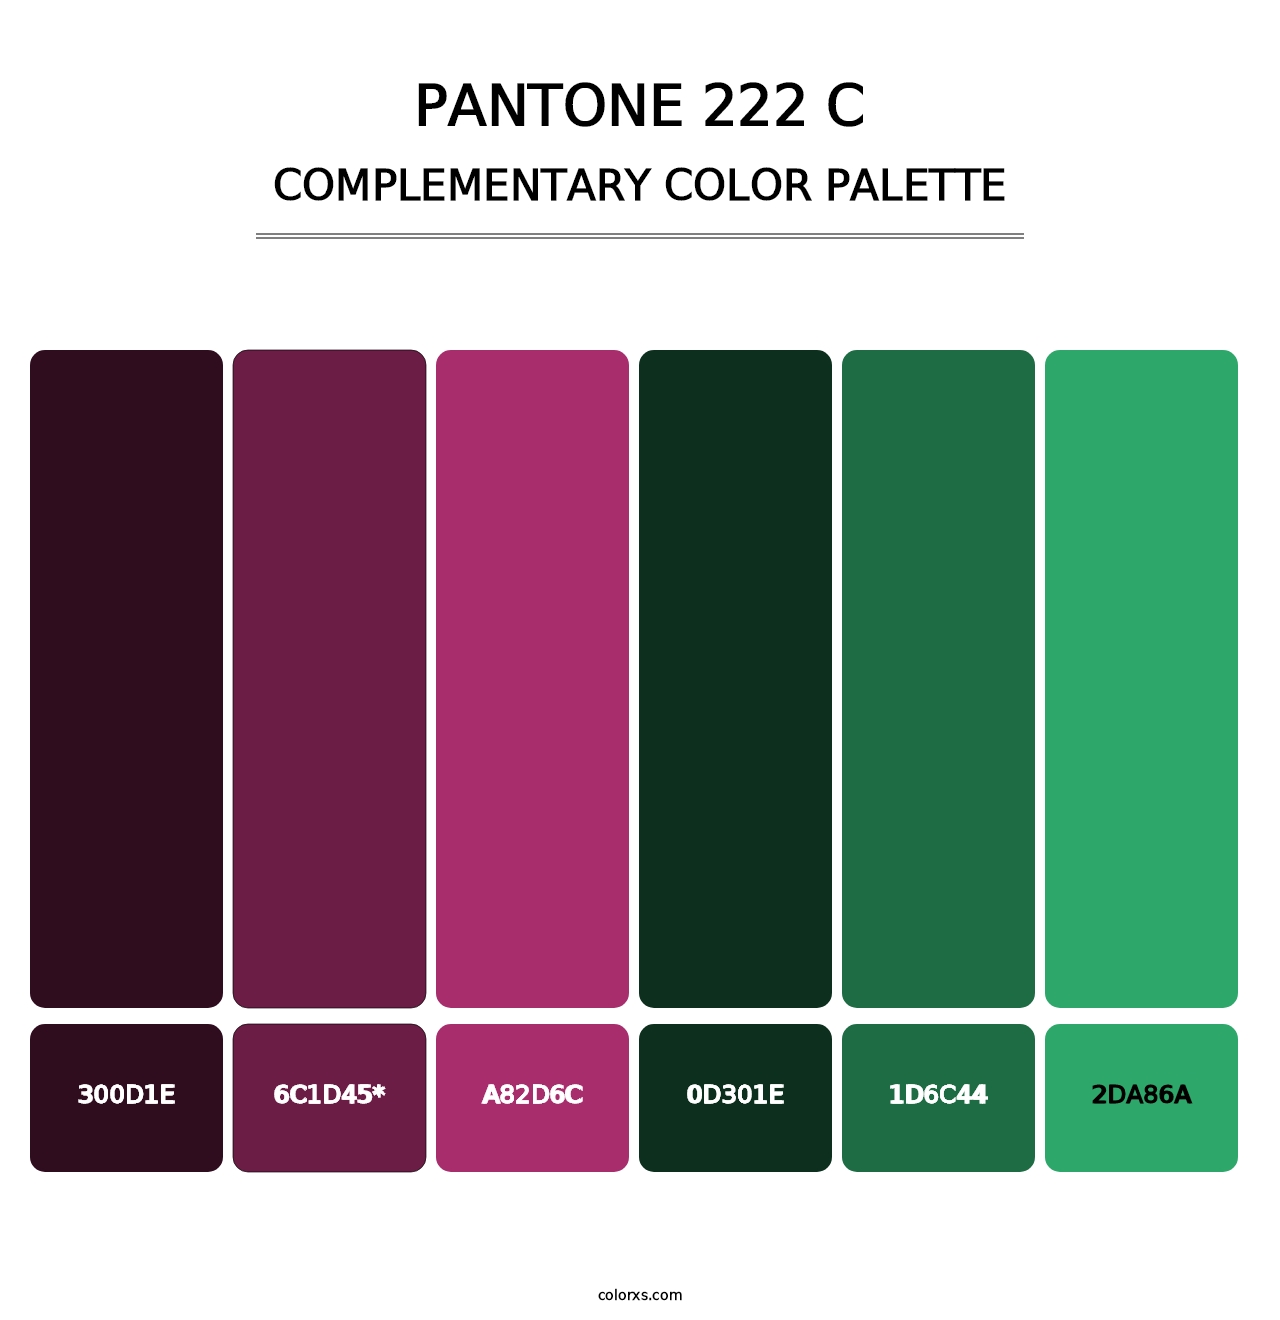 PANTONE 222 C - Complementary Color Palette